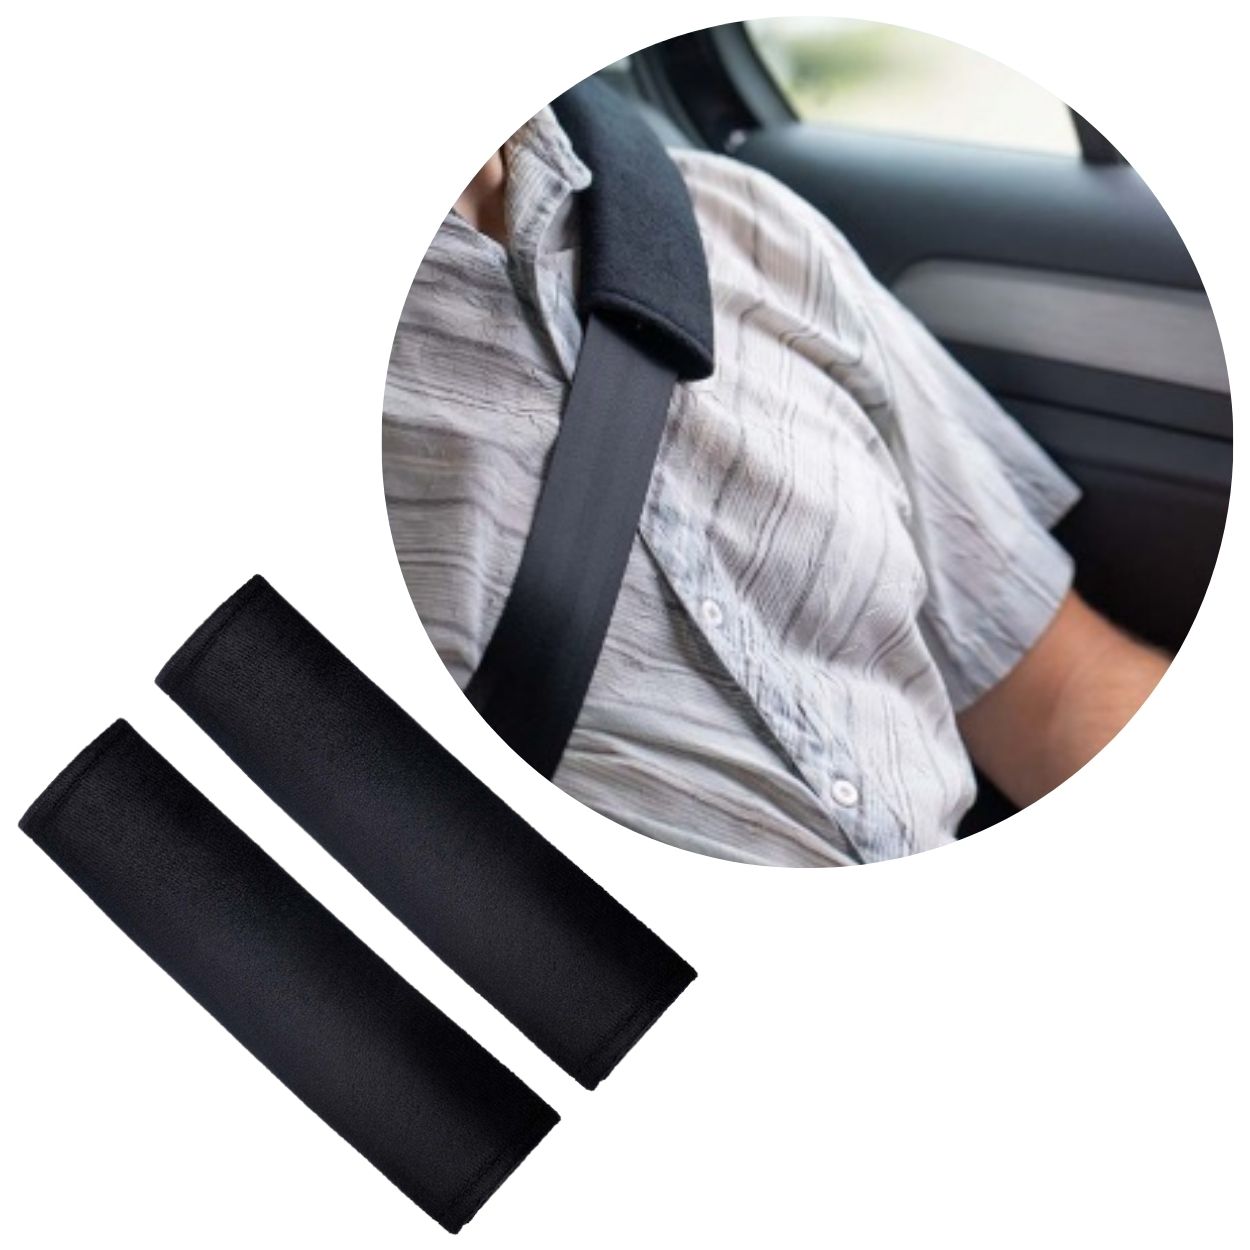 Tassen & portemonnees Bagage & Reizen Bagageriemen Personalized seatbelt cover/ bag strap cover 